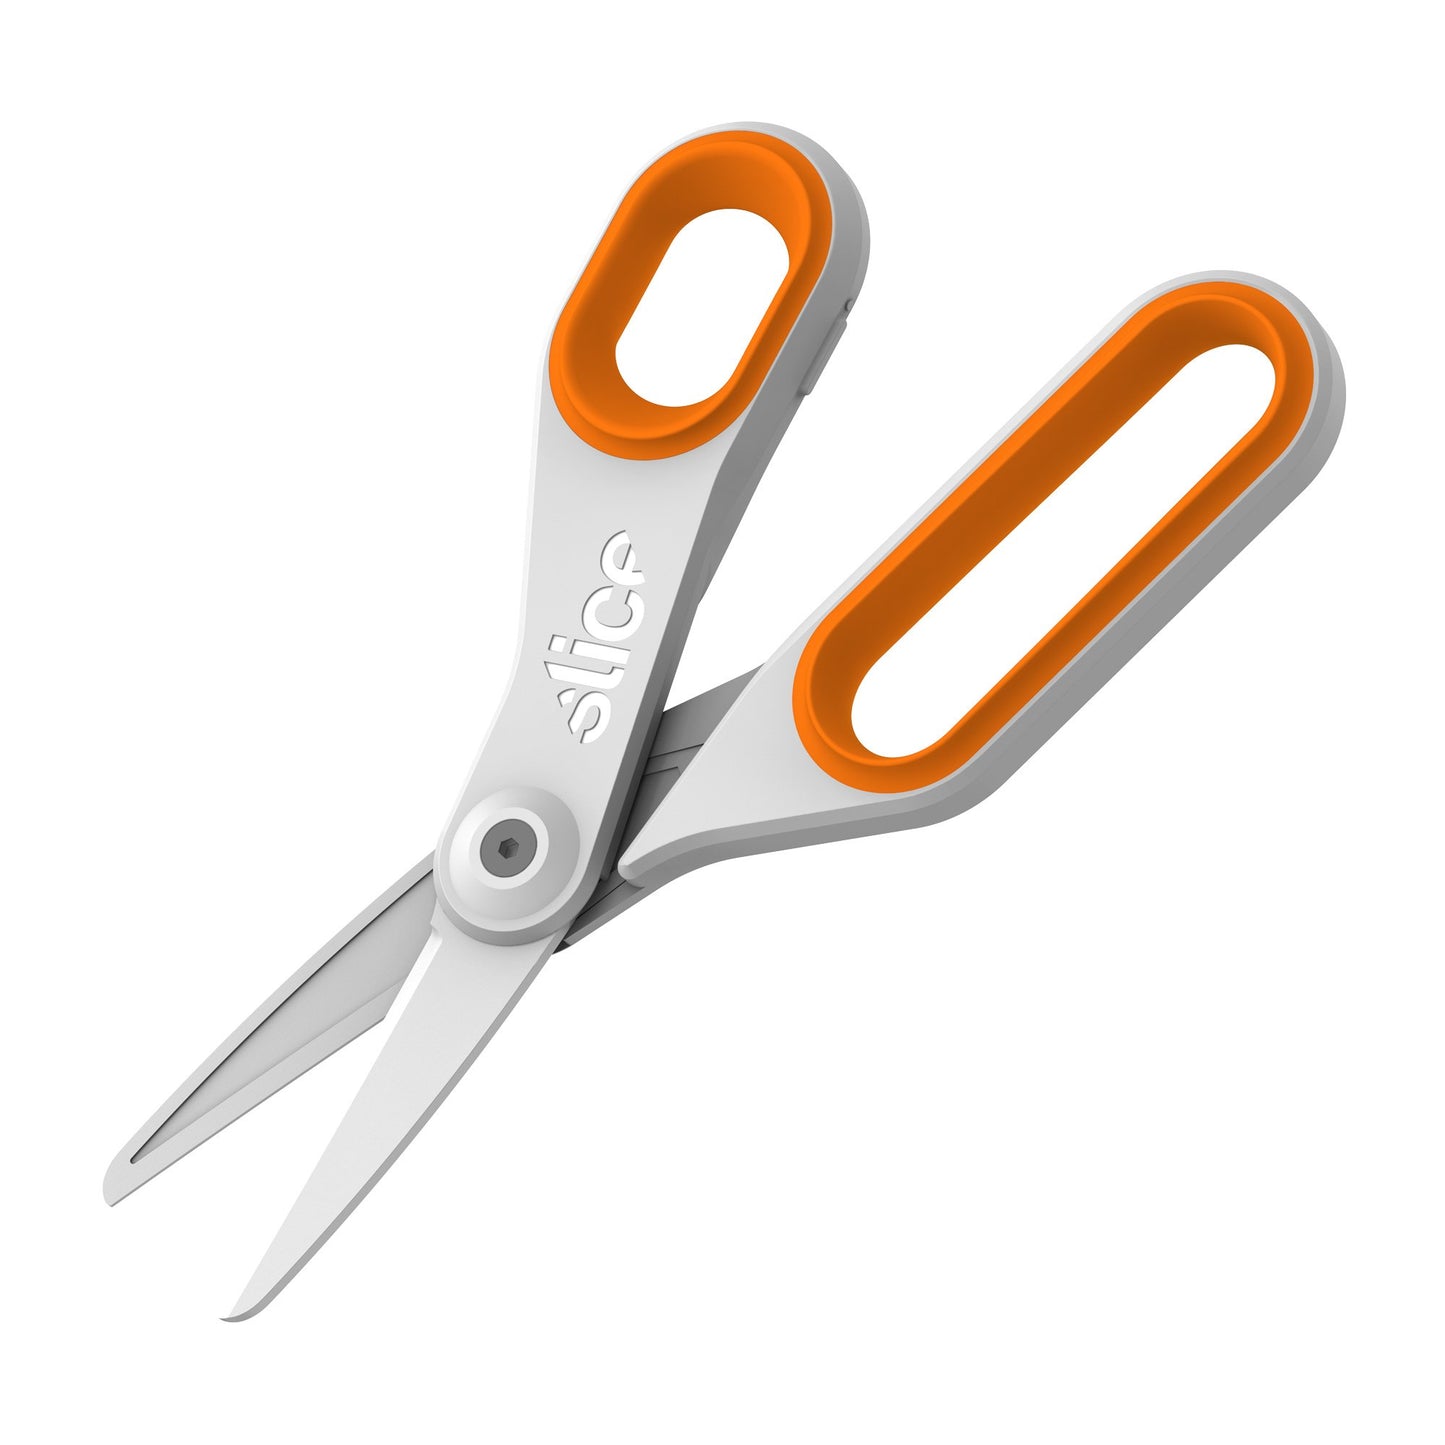 The Slice® 10545 Large Scissors